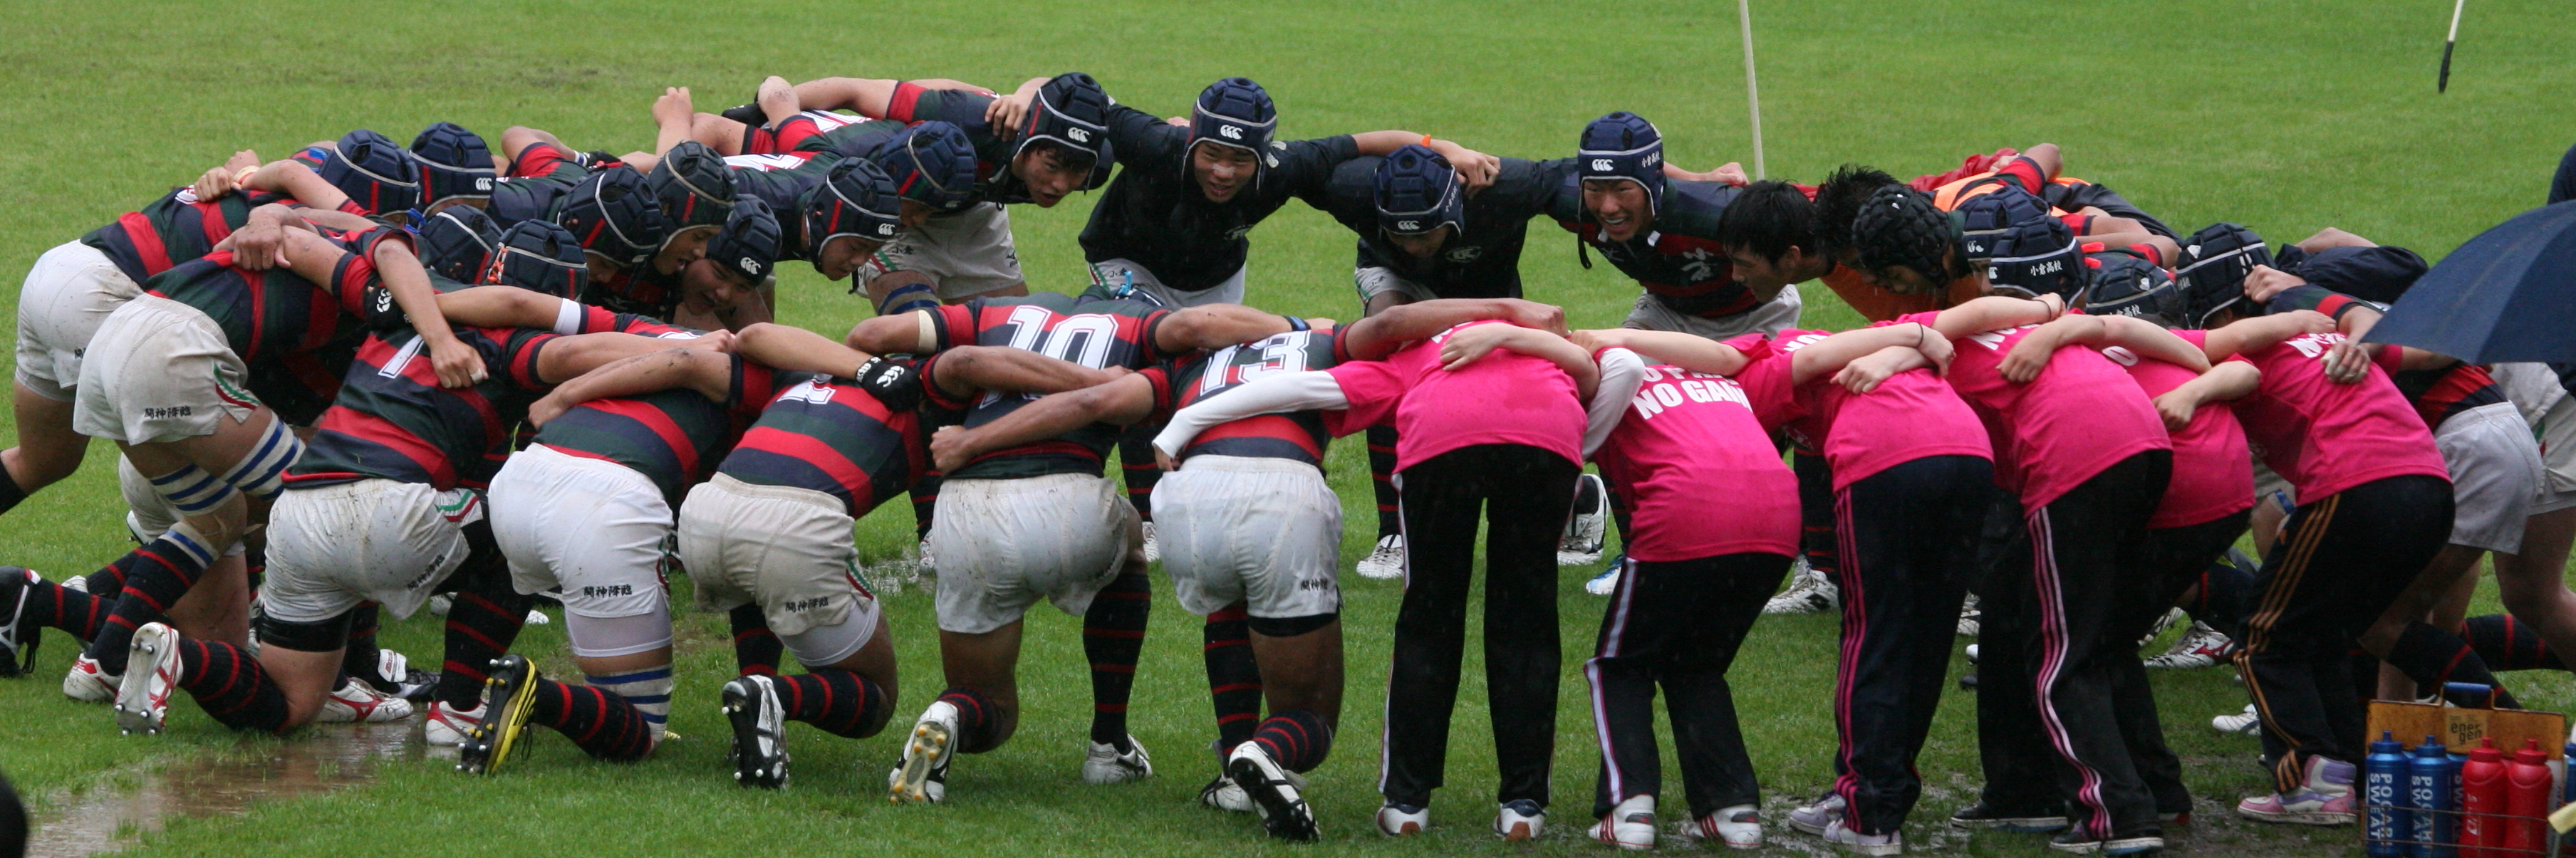 http://kokura-rugby.sakura.ne.jp/2011.5.29-2B.JPG